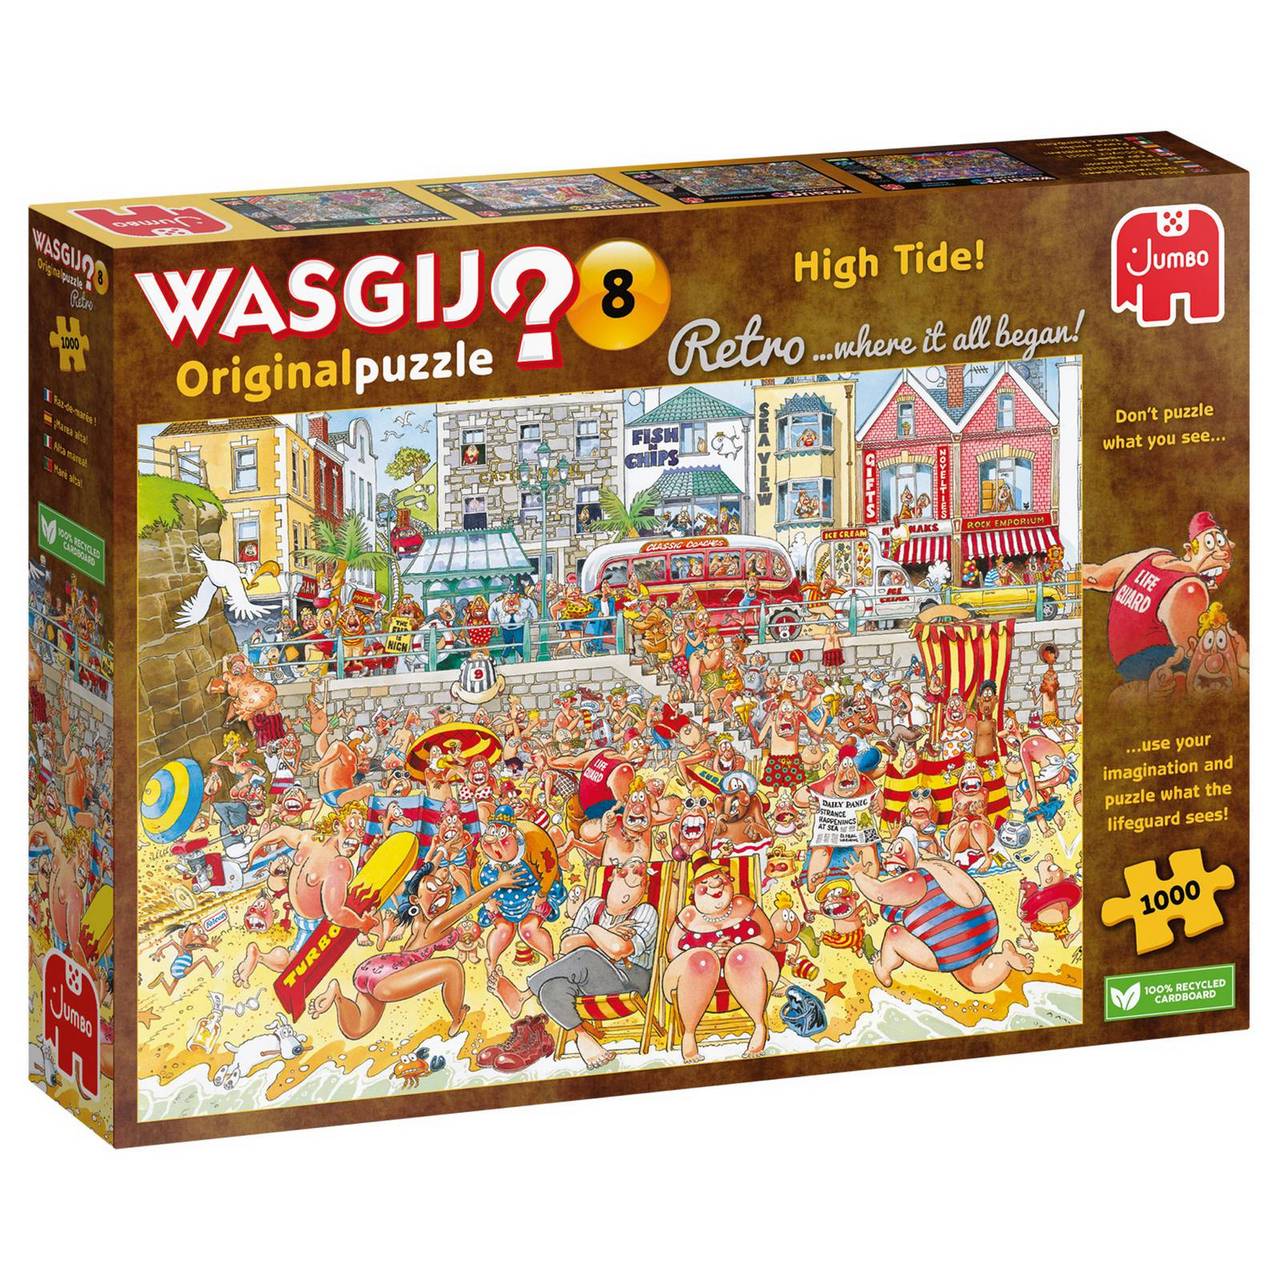 Wasgij - Retro Original 8 High Tide! - 1000 Piece Jigsaw Puzzle